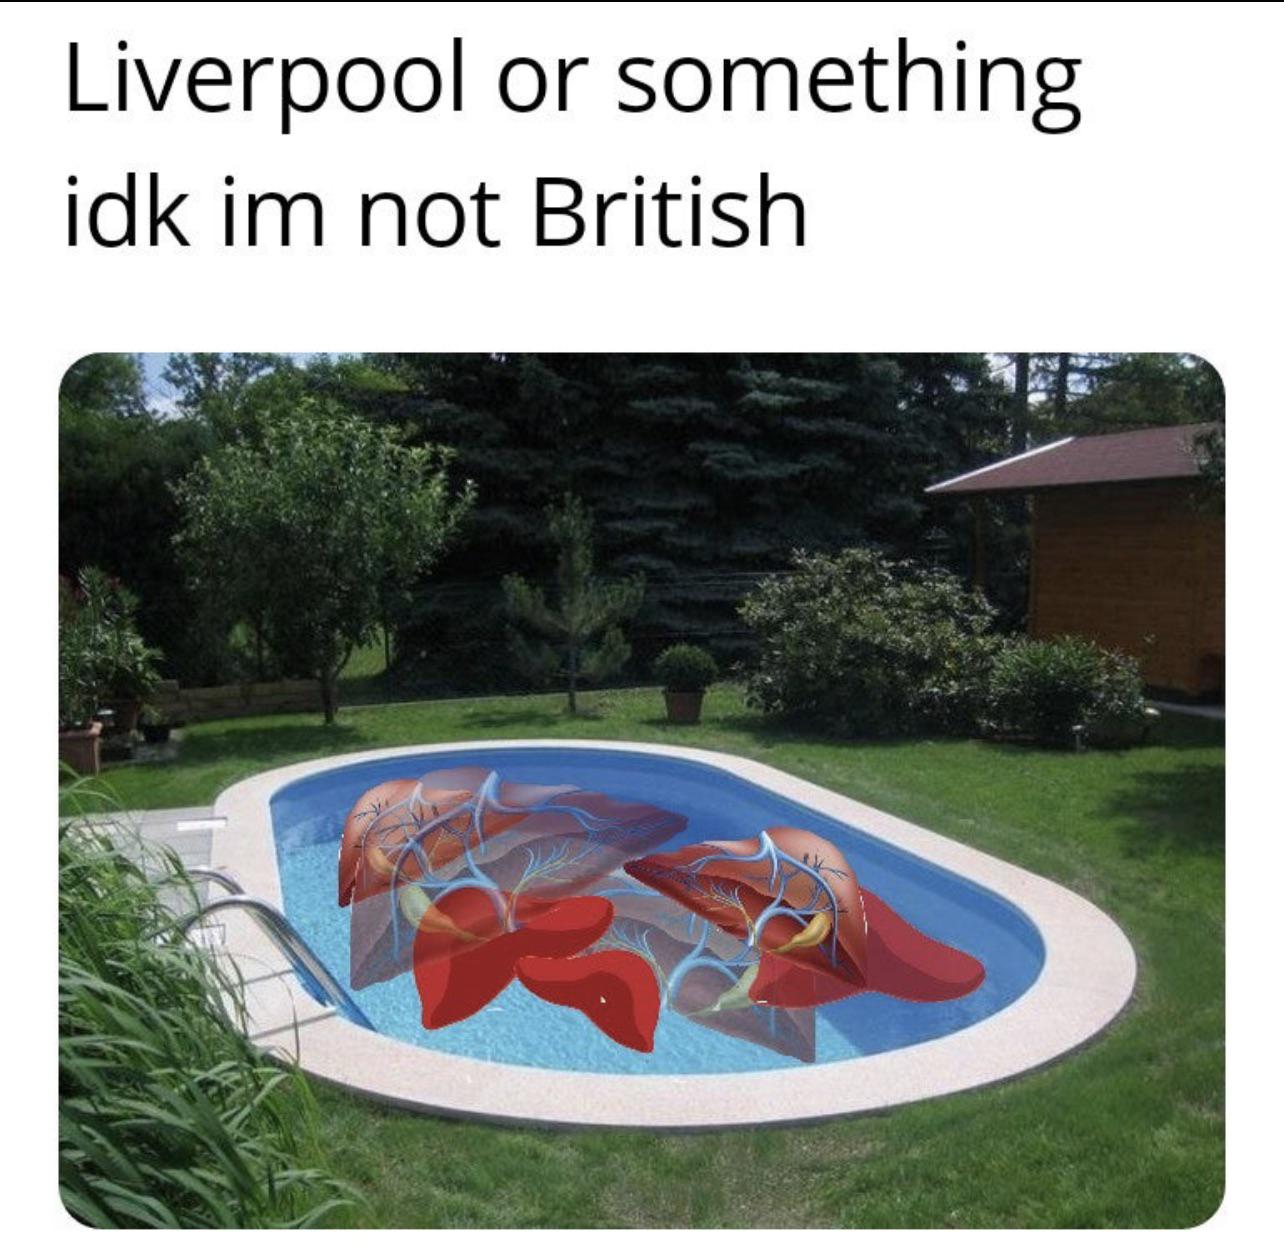 Liverpool or something idk im not British